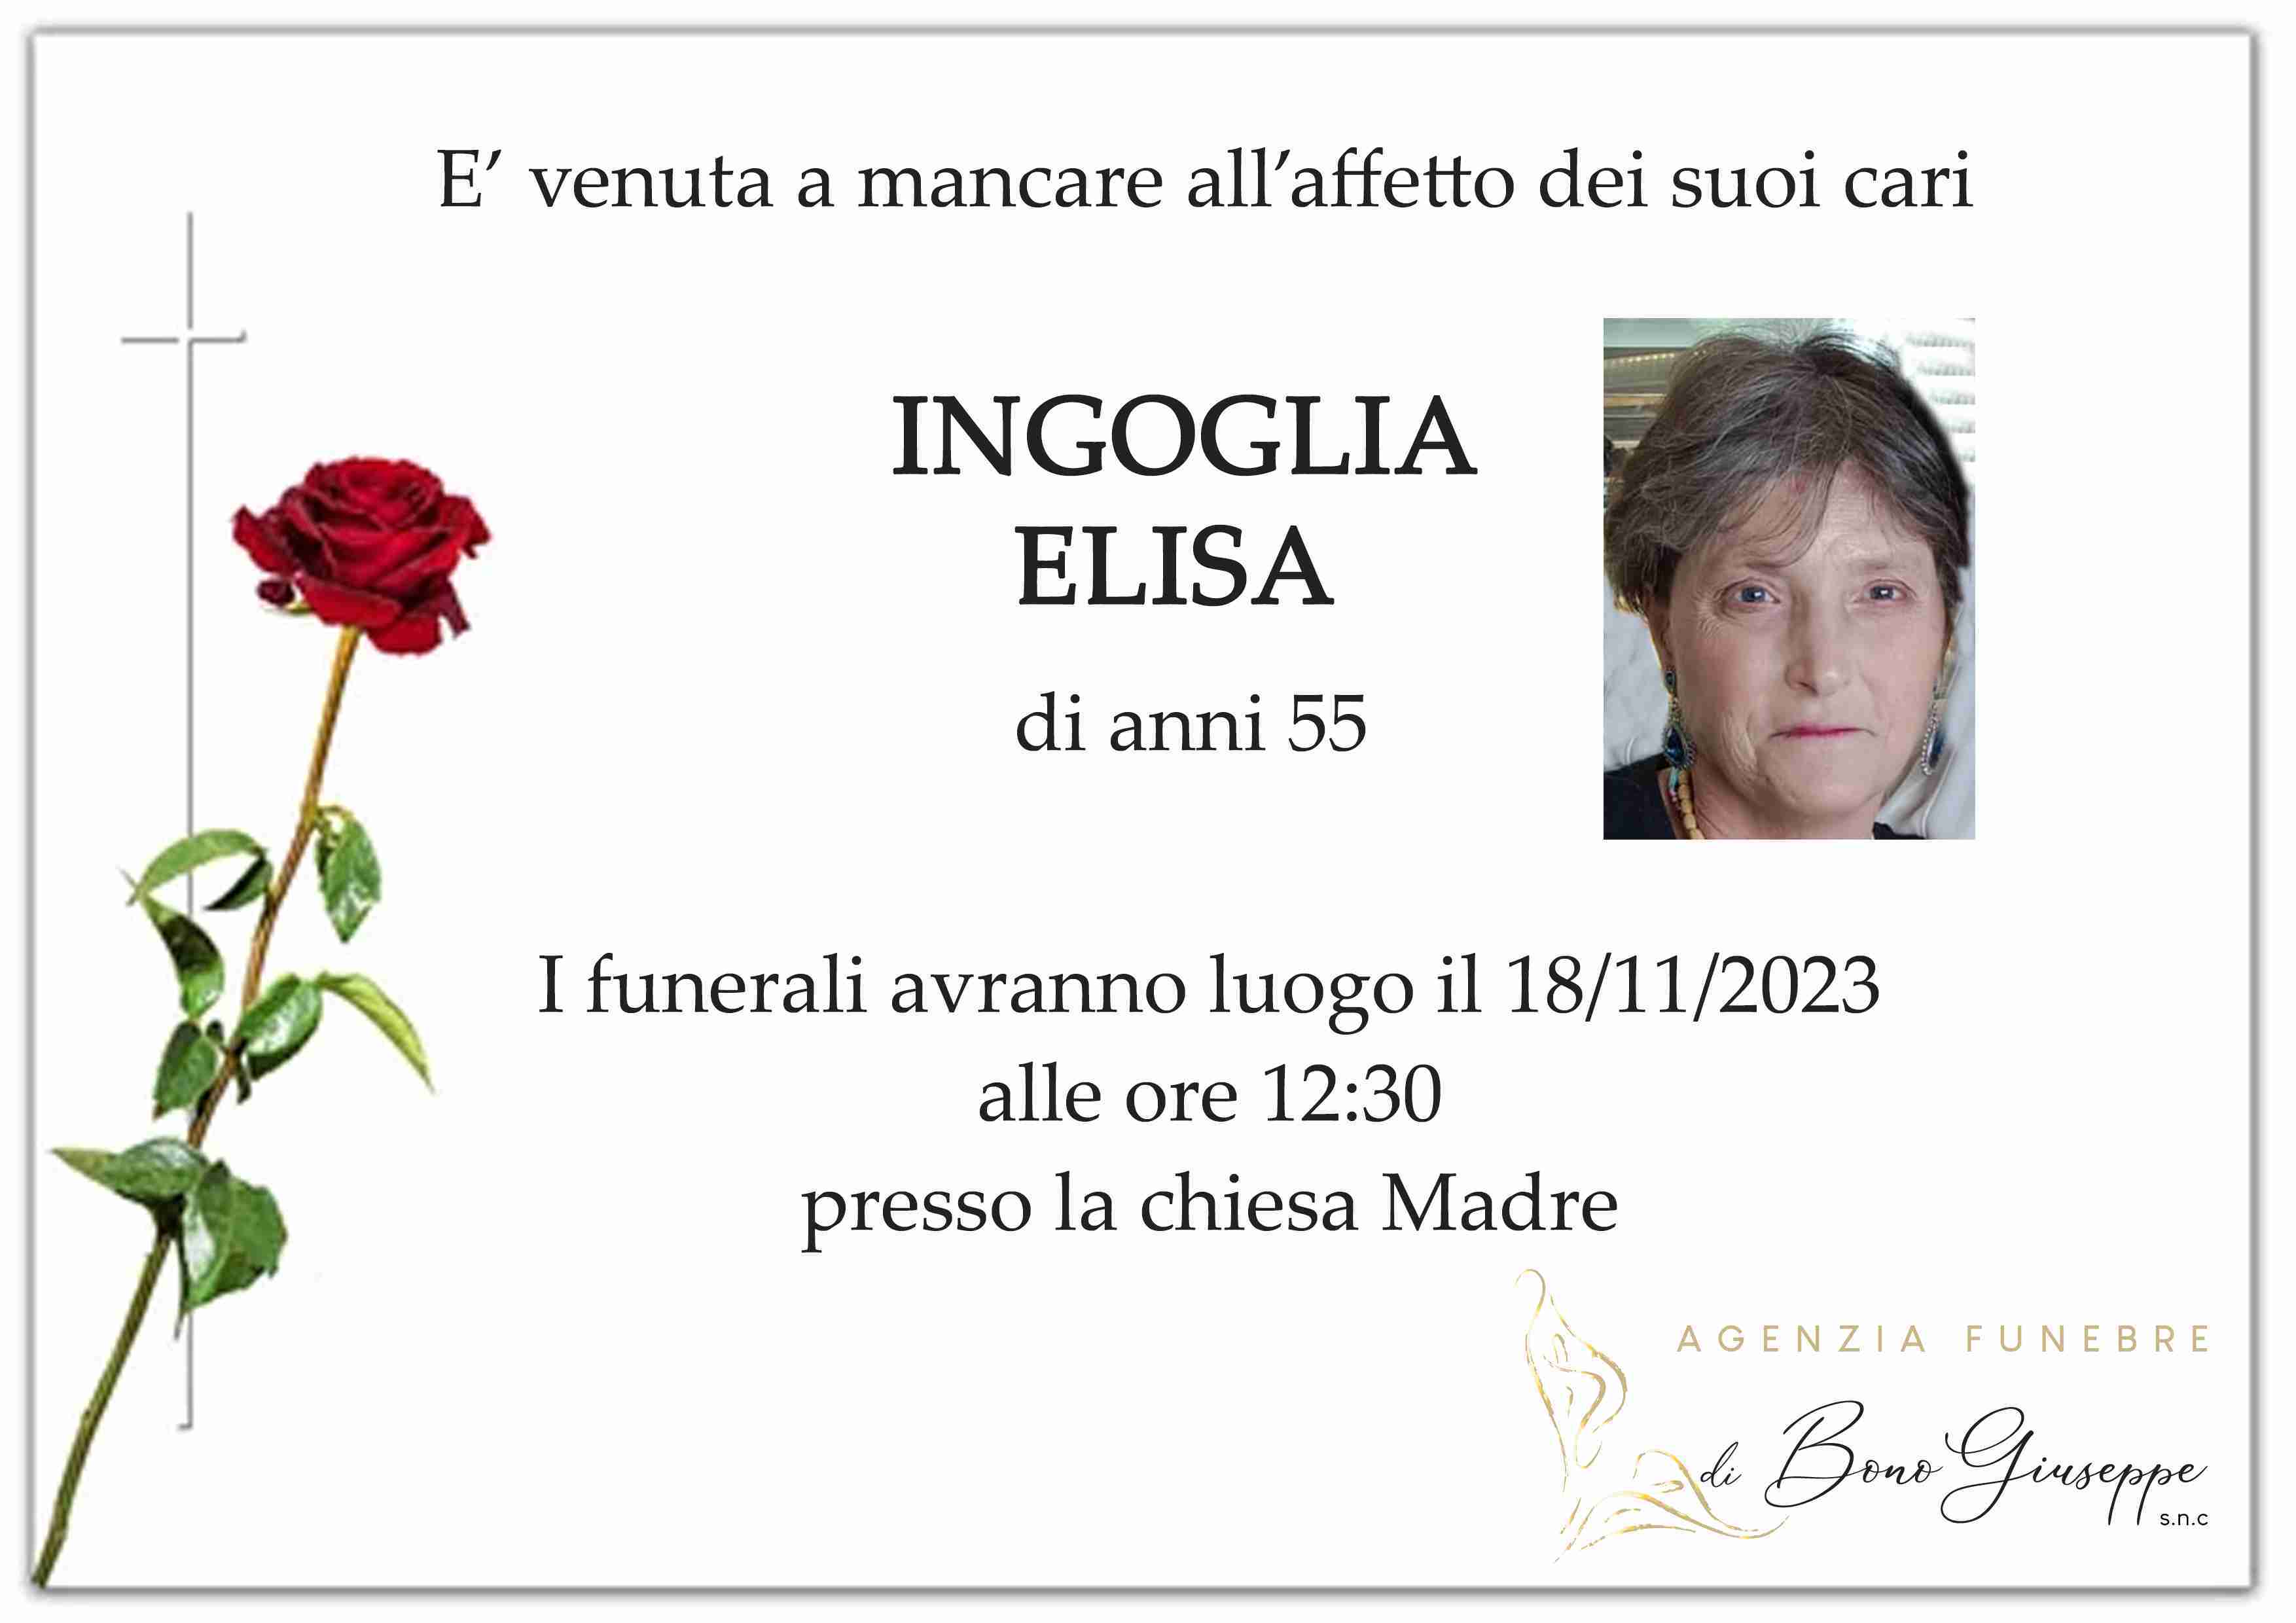 Elisa Ingoglia